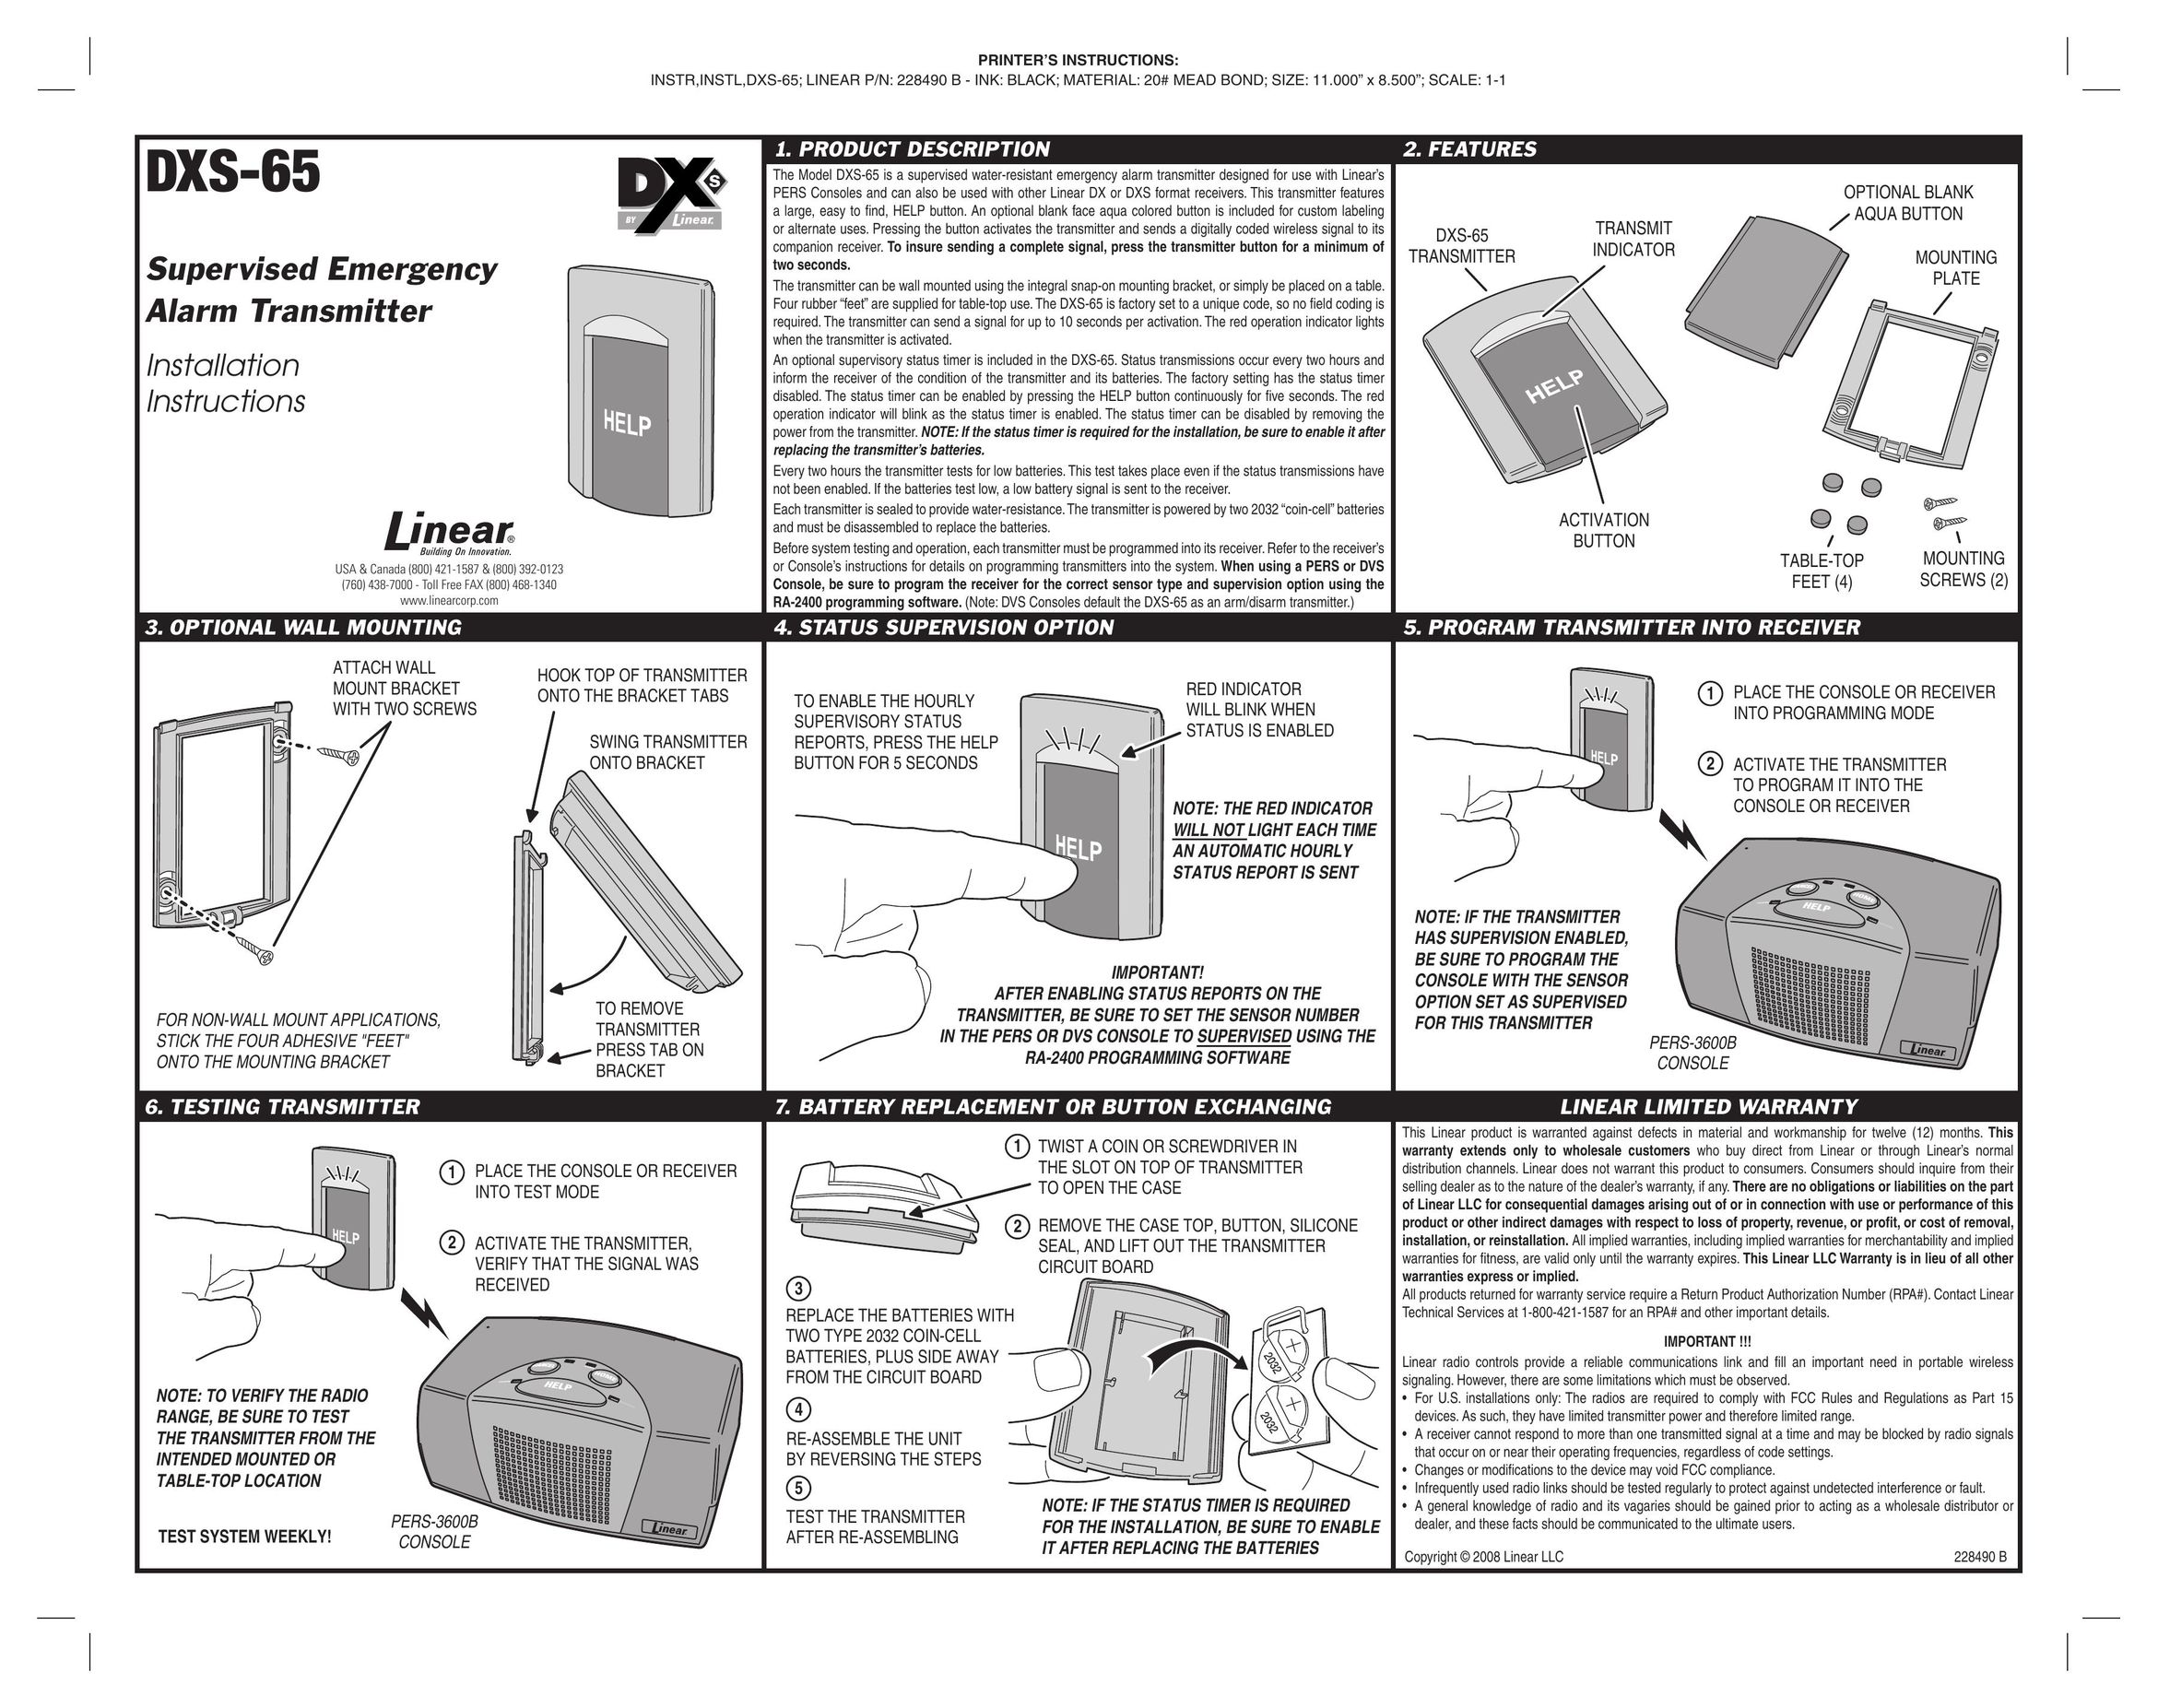 Niles Audio DXS-65 Network Card User Manual